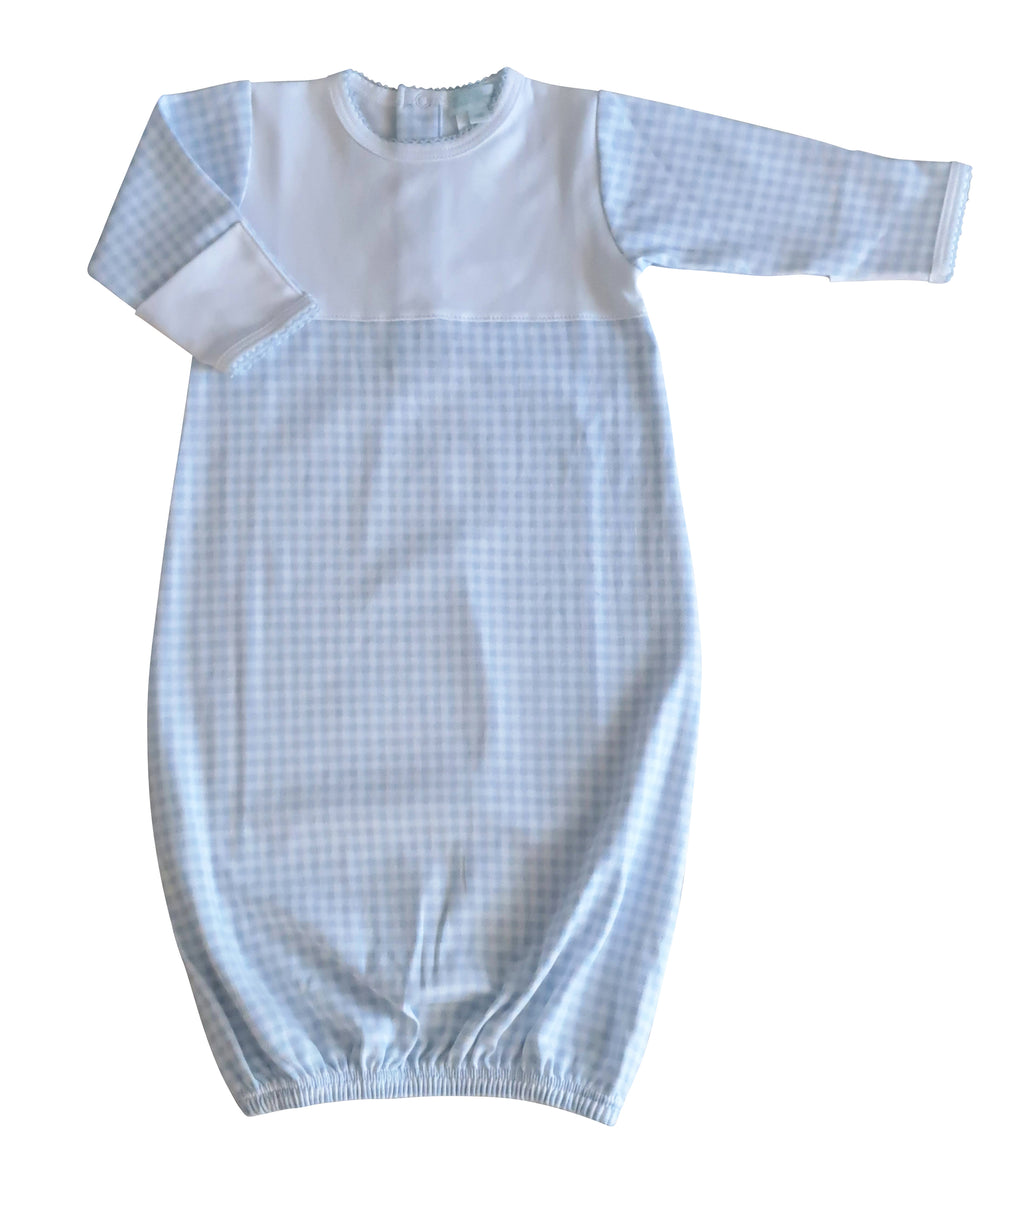 Baby Boy's "Blue Checks" Pima Cotton Gown - Little Threads Inc. Children's Clothing